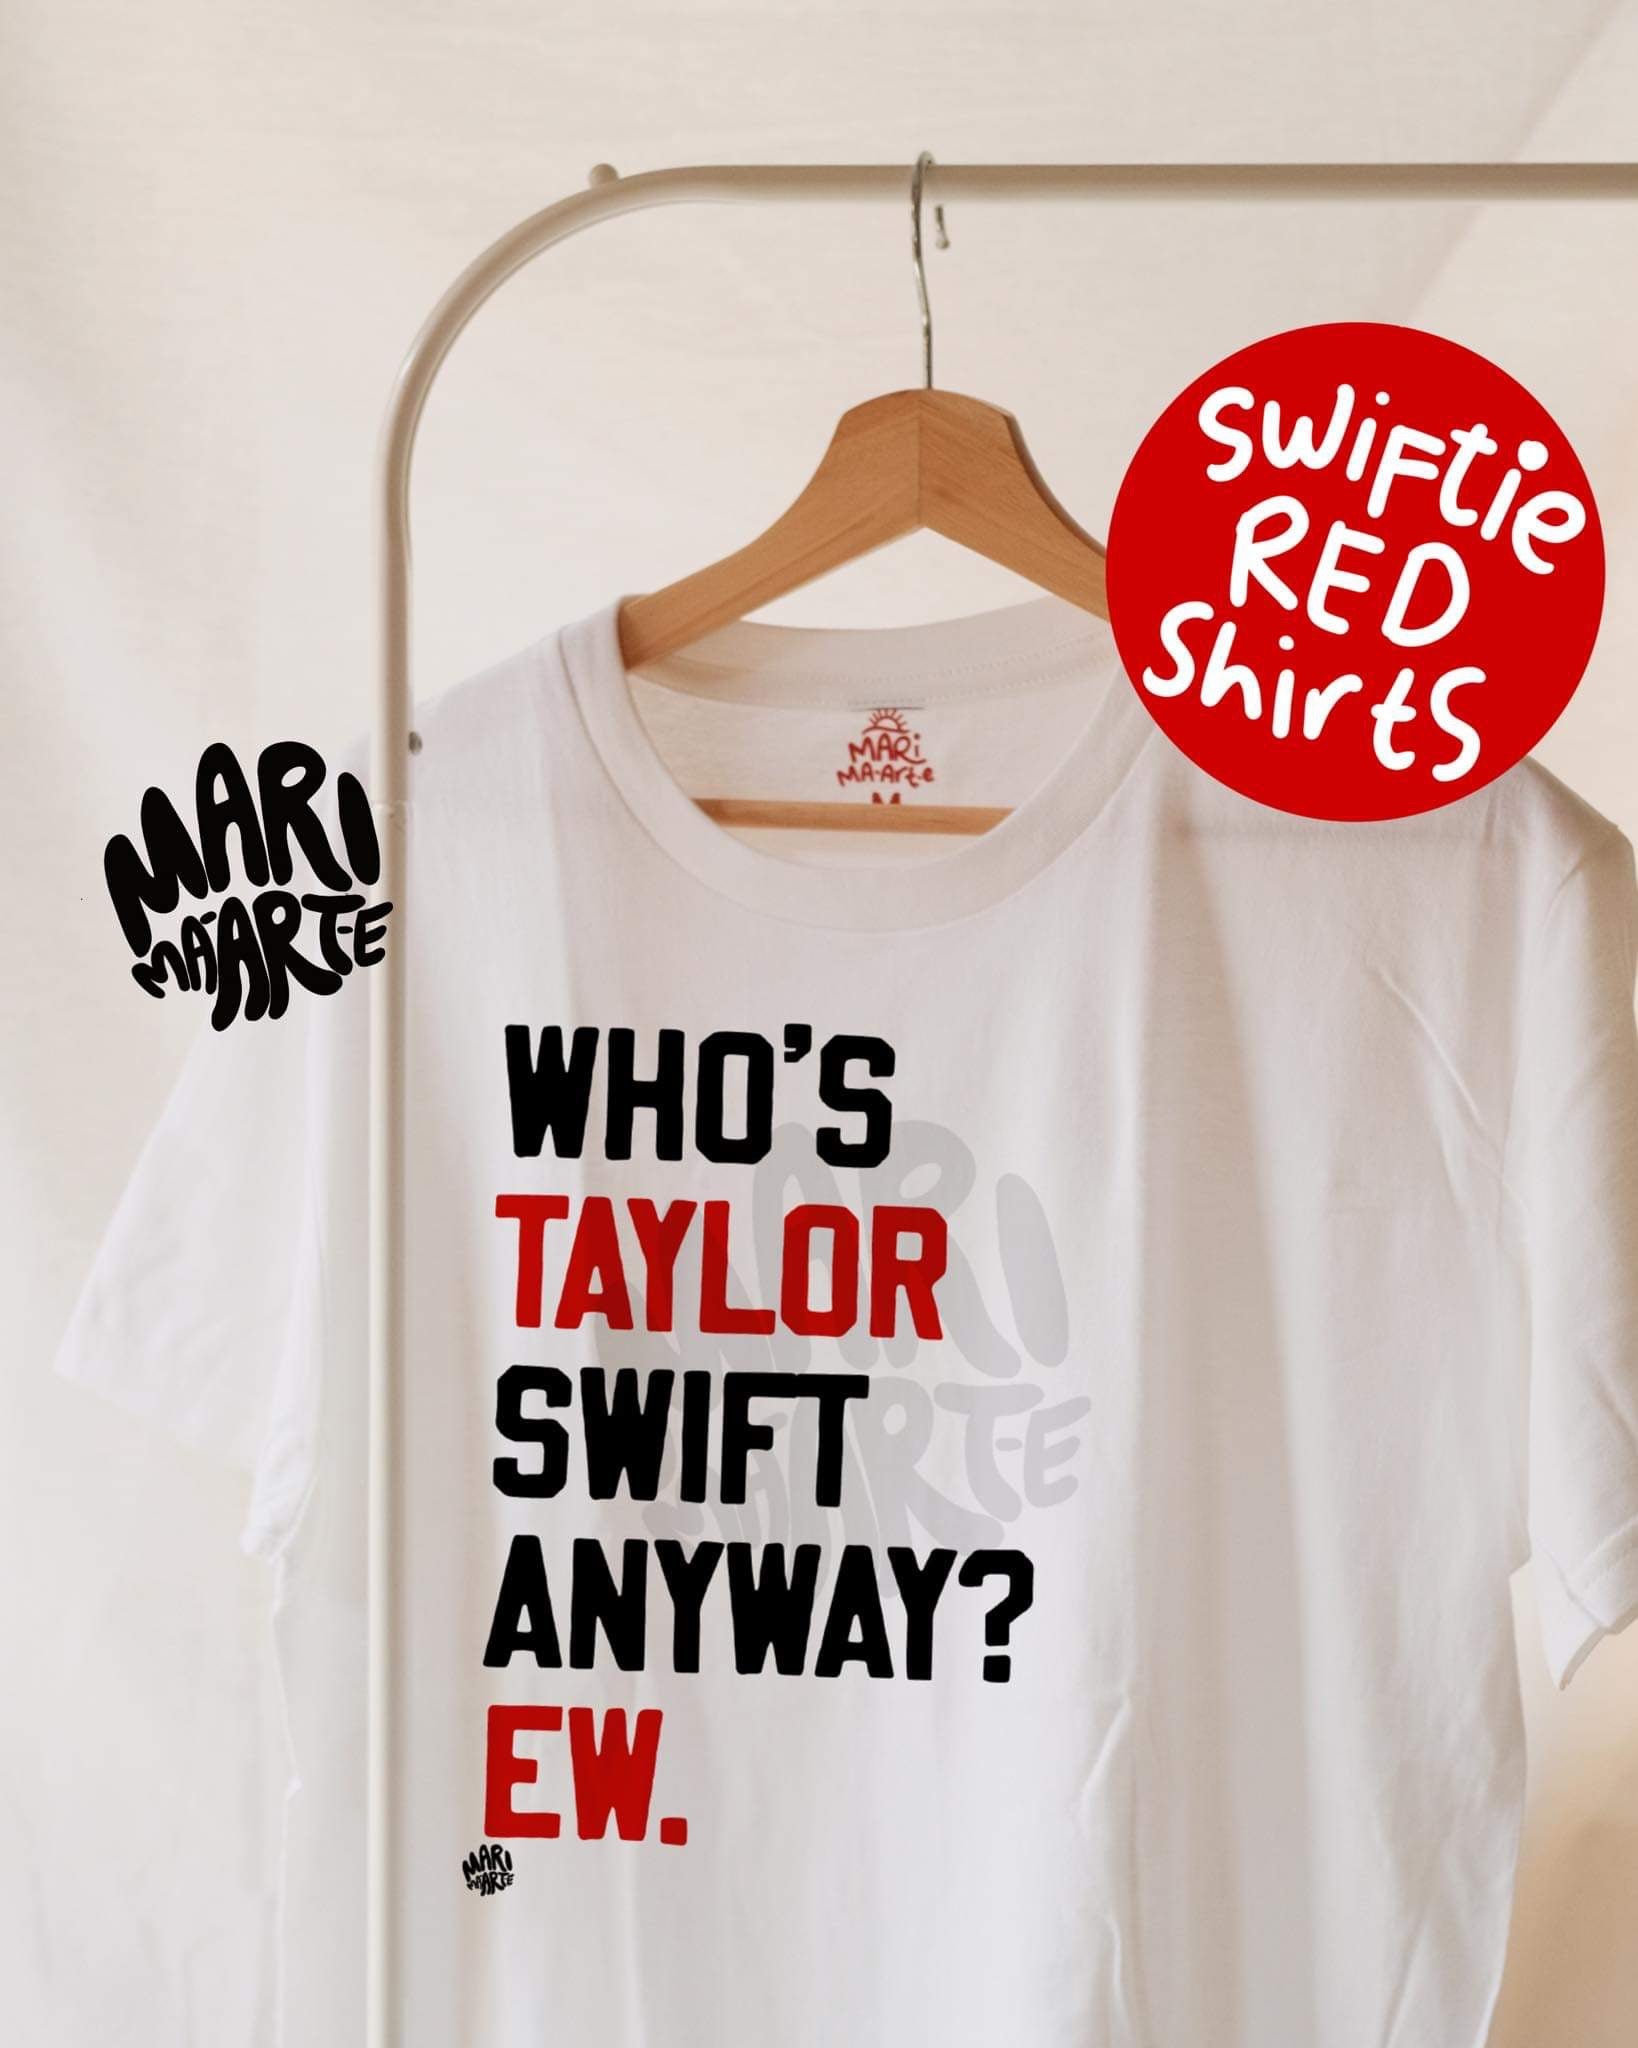 MARI MA-ART-E Taylor Swift Merch 10% Sale